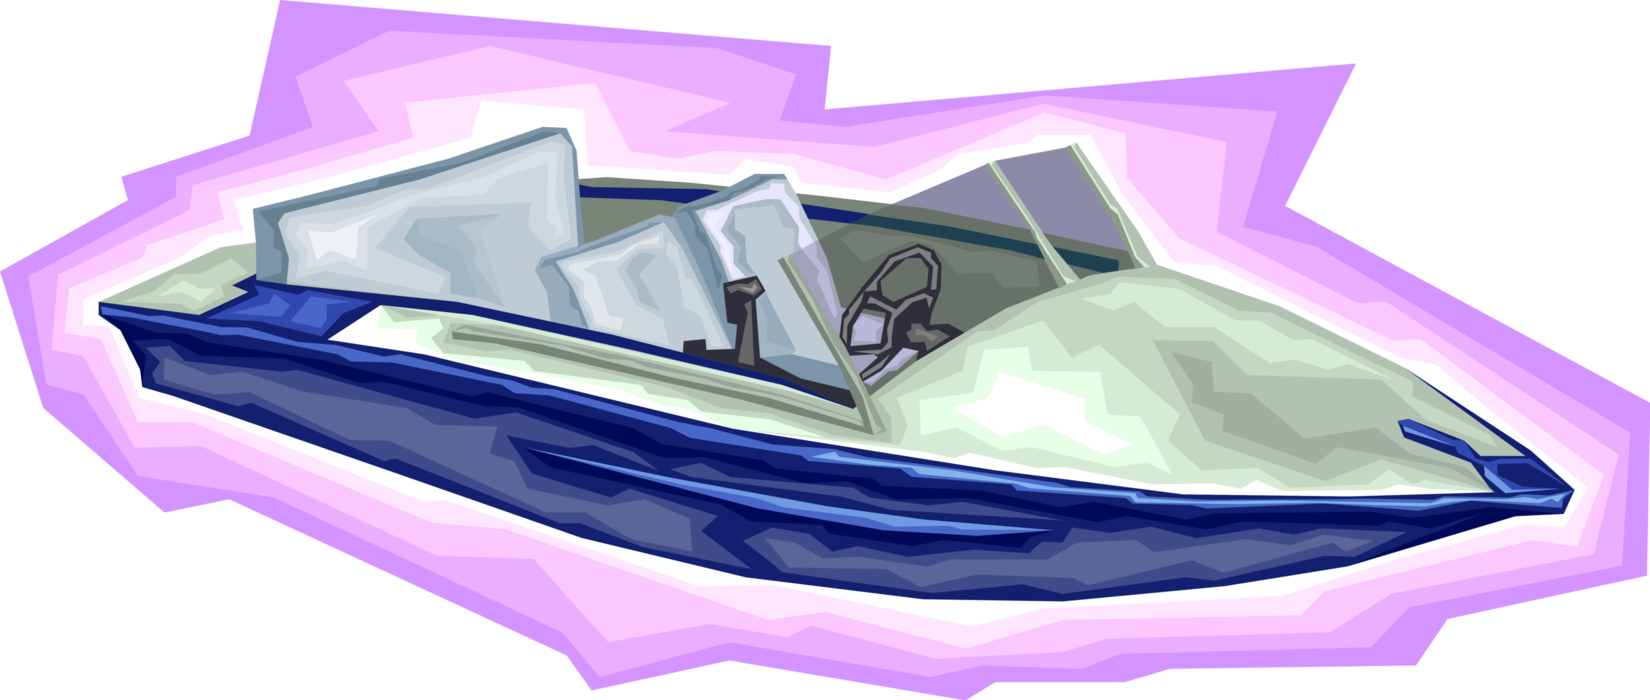 Vector Illustration of Watercraft Speed Boat, Ski Boat, Pleasure Craft Motor Boat